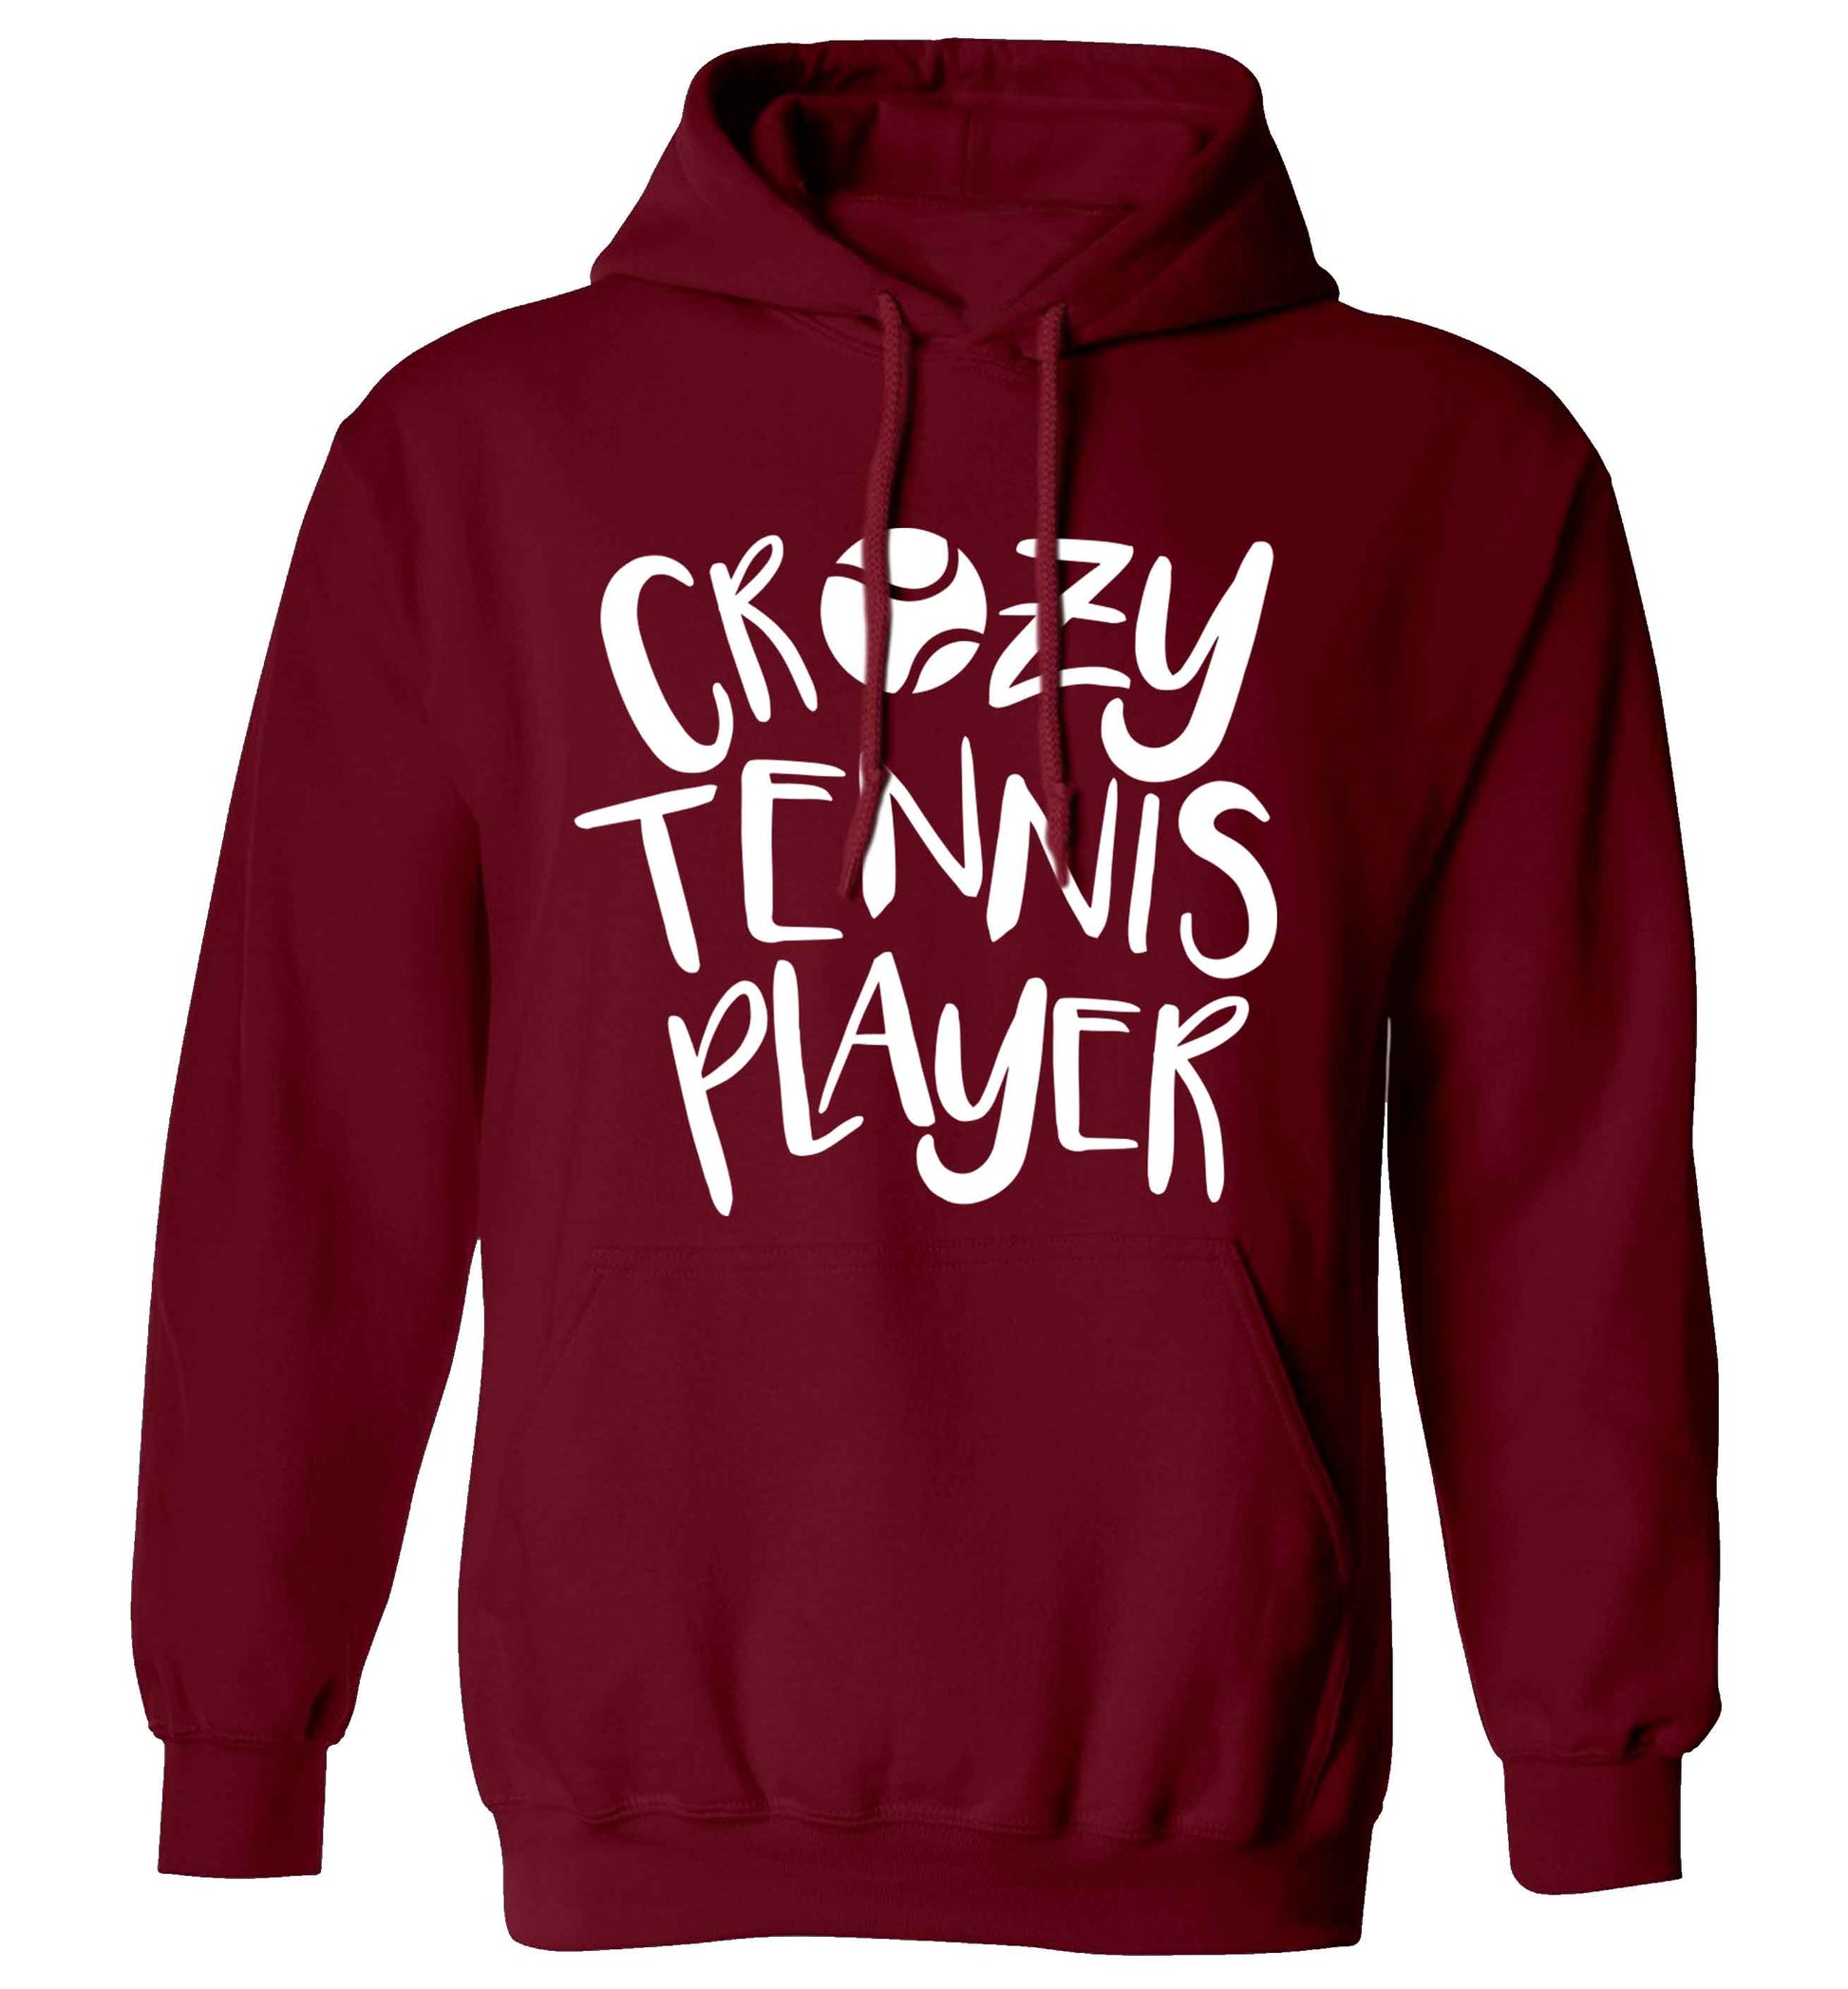 Crazy tennis player adults unisex maroon hoodie 2XL